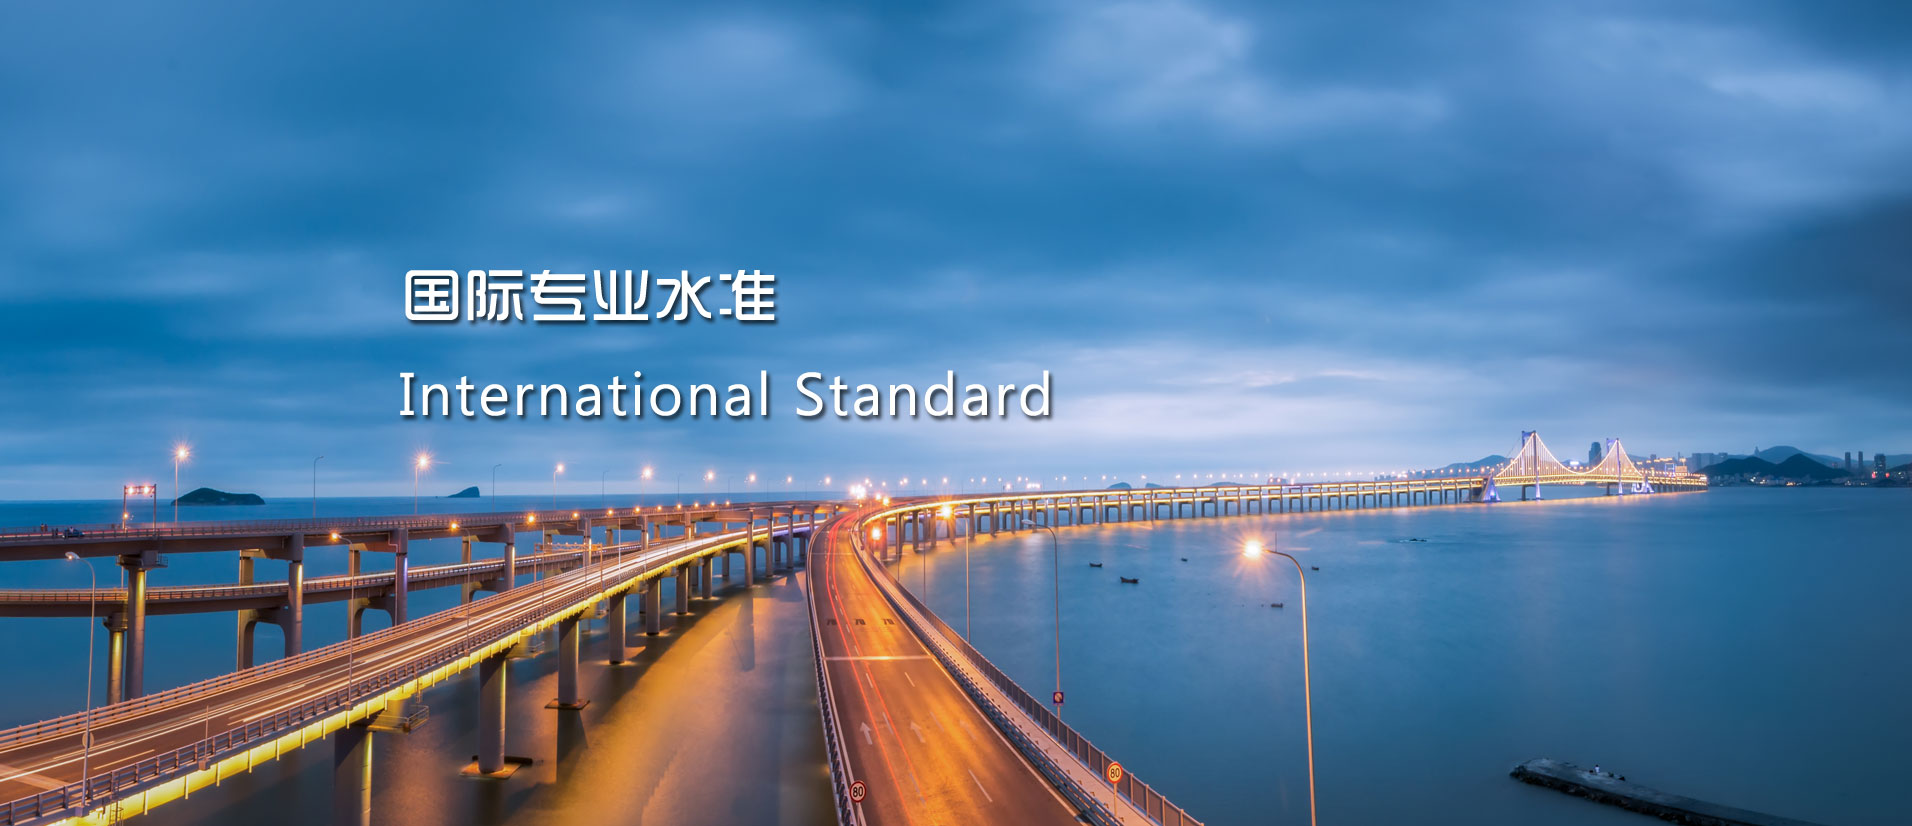 International Standard